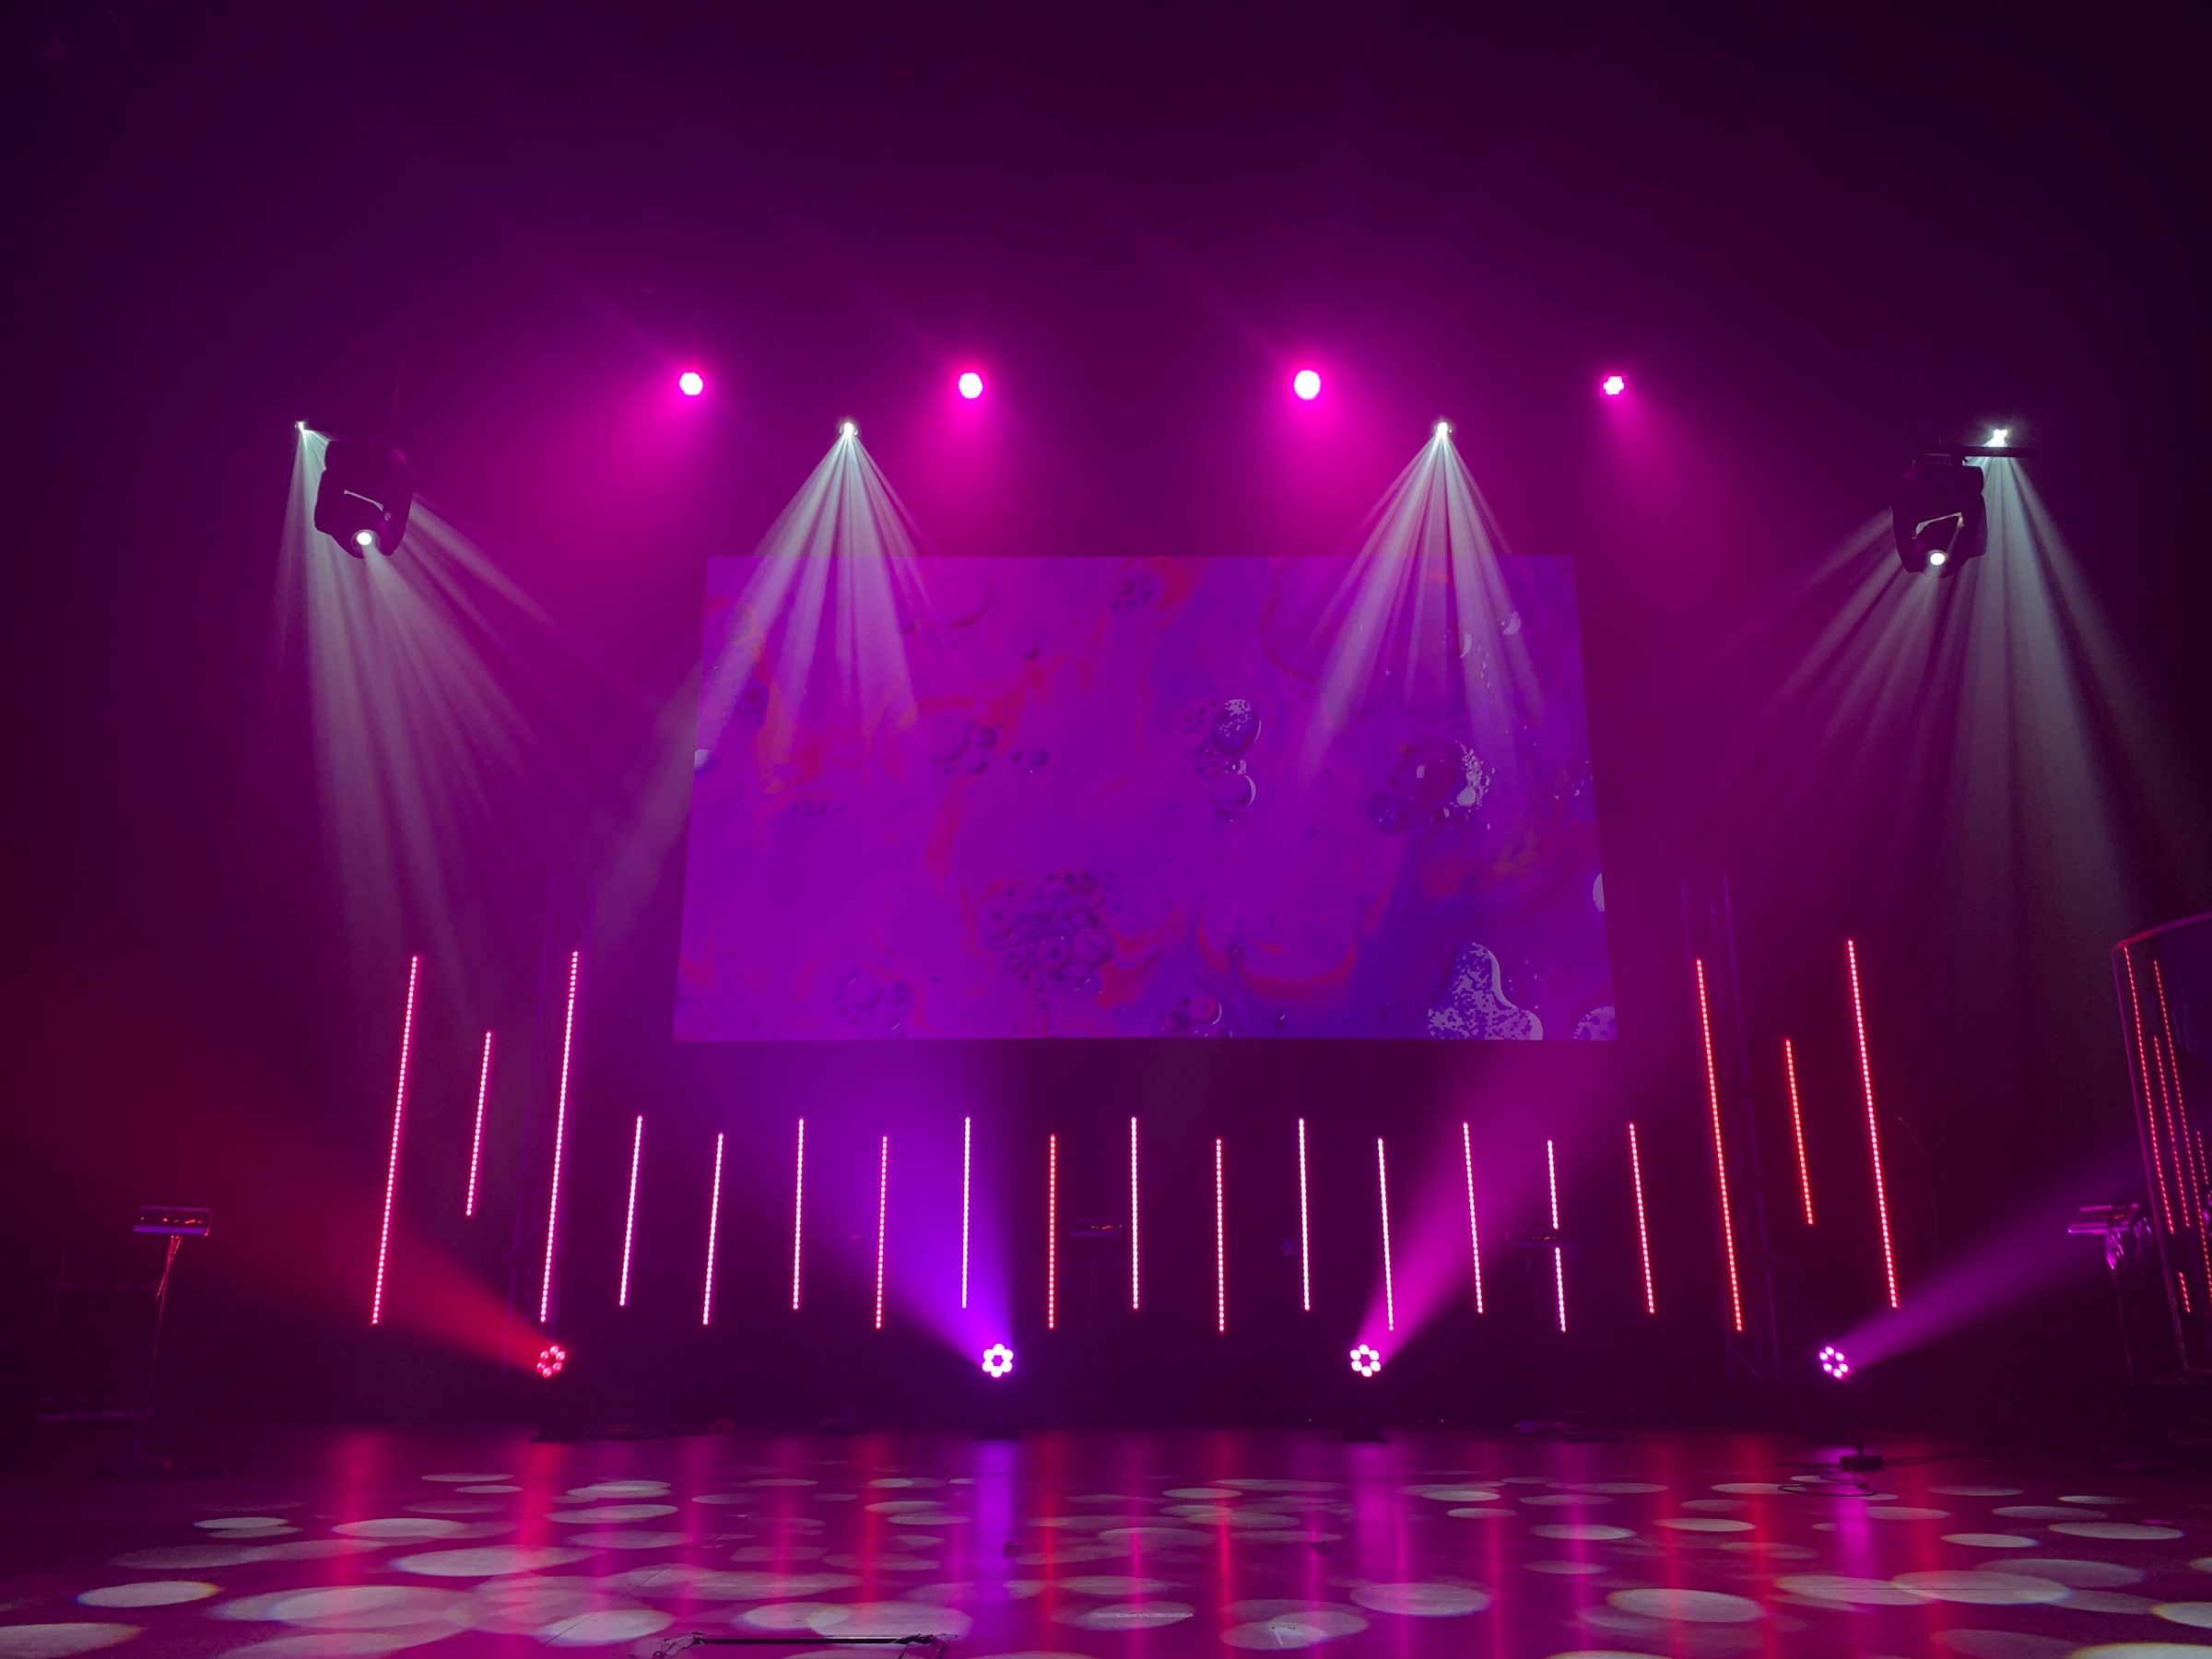 LED lights on a stage